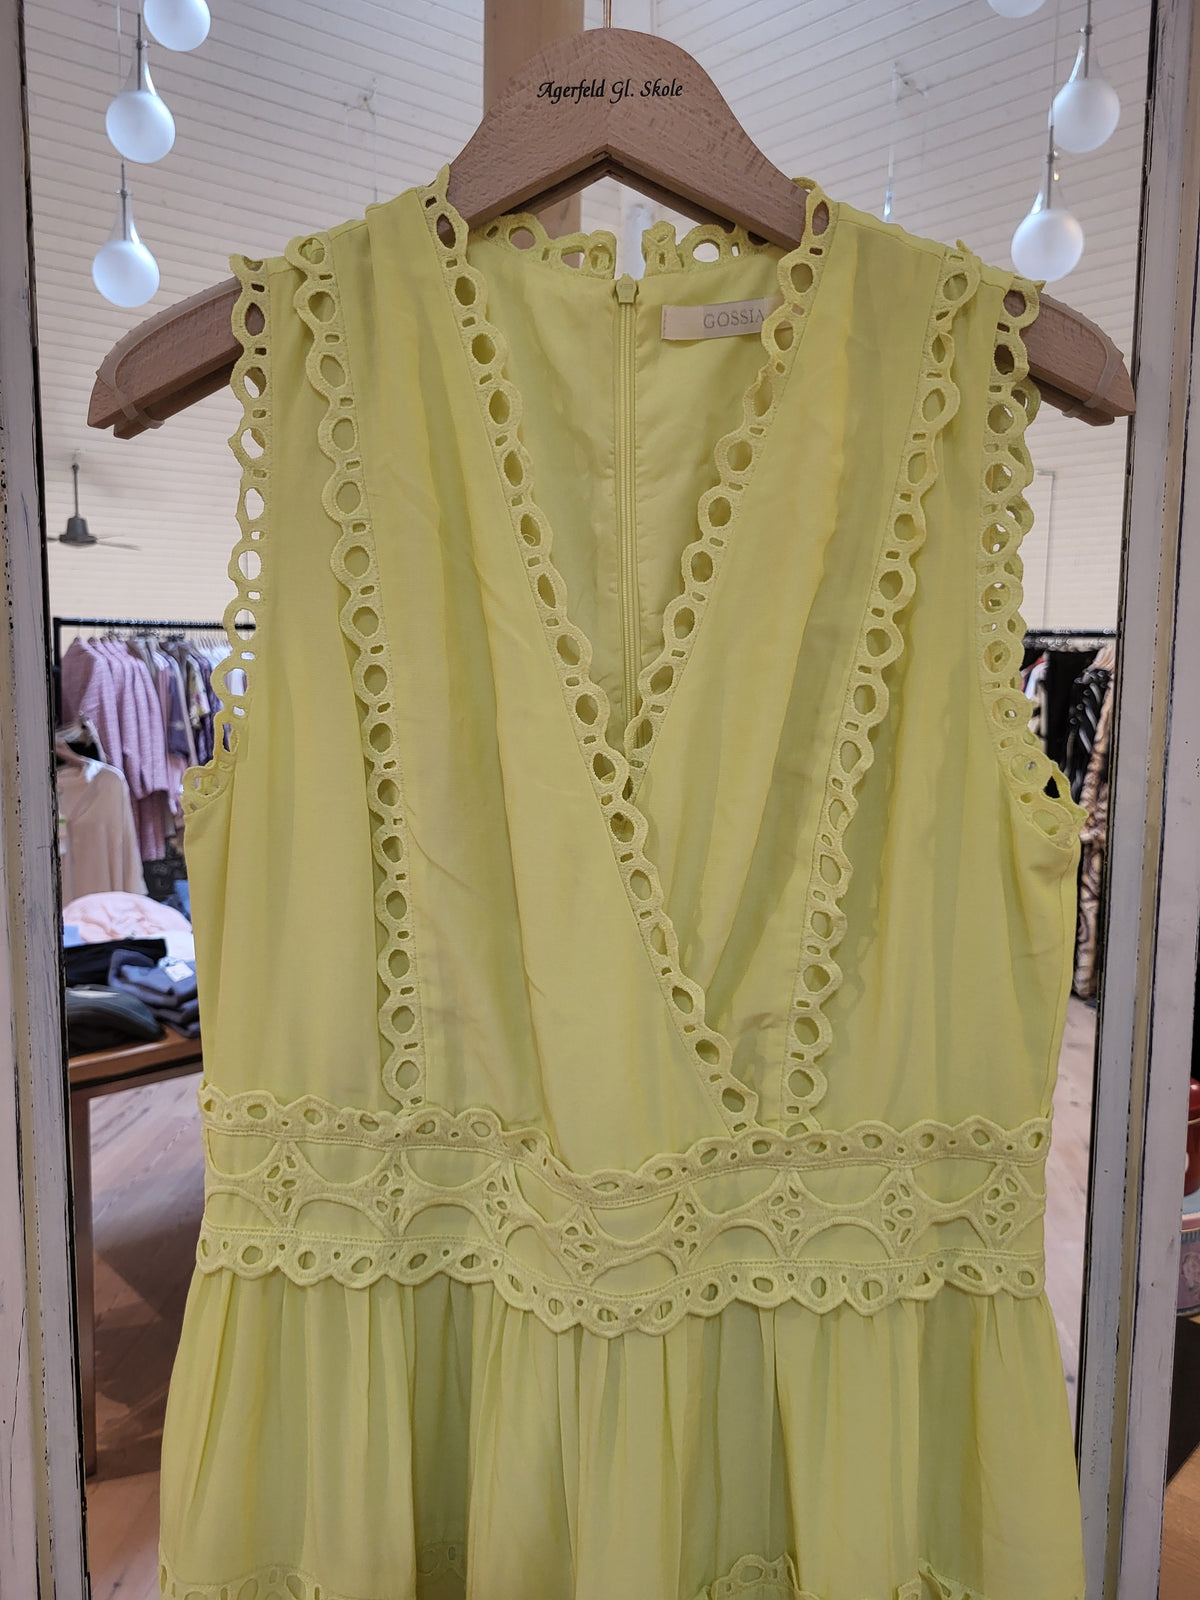 Gossia AnjelicaGO Dress, Summer Yellow